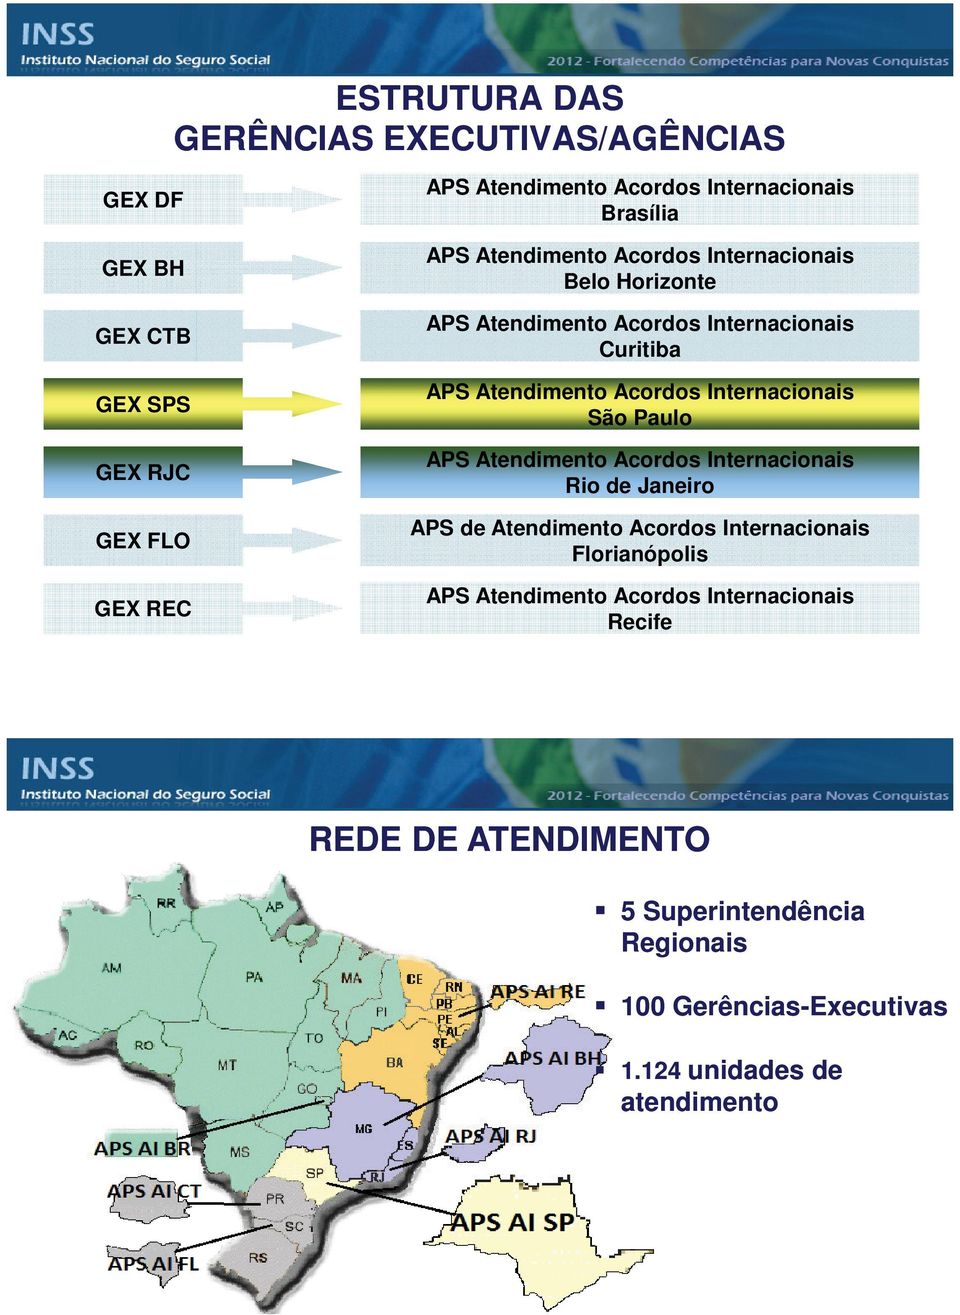 Internacionais São Paulo APS Atendimento Acordos Internacionais Rio de Janeiro APS de Atendimento Acordos Internacionais Florianópolis APS